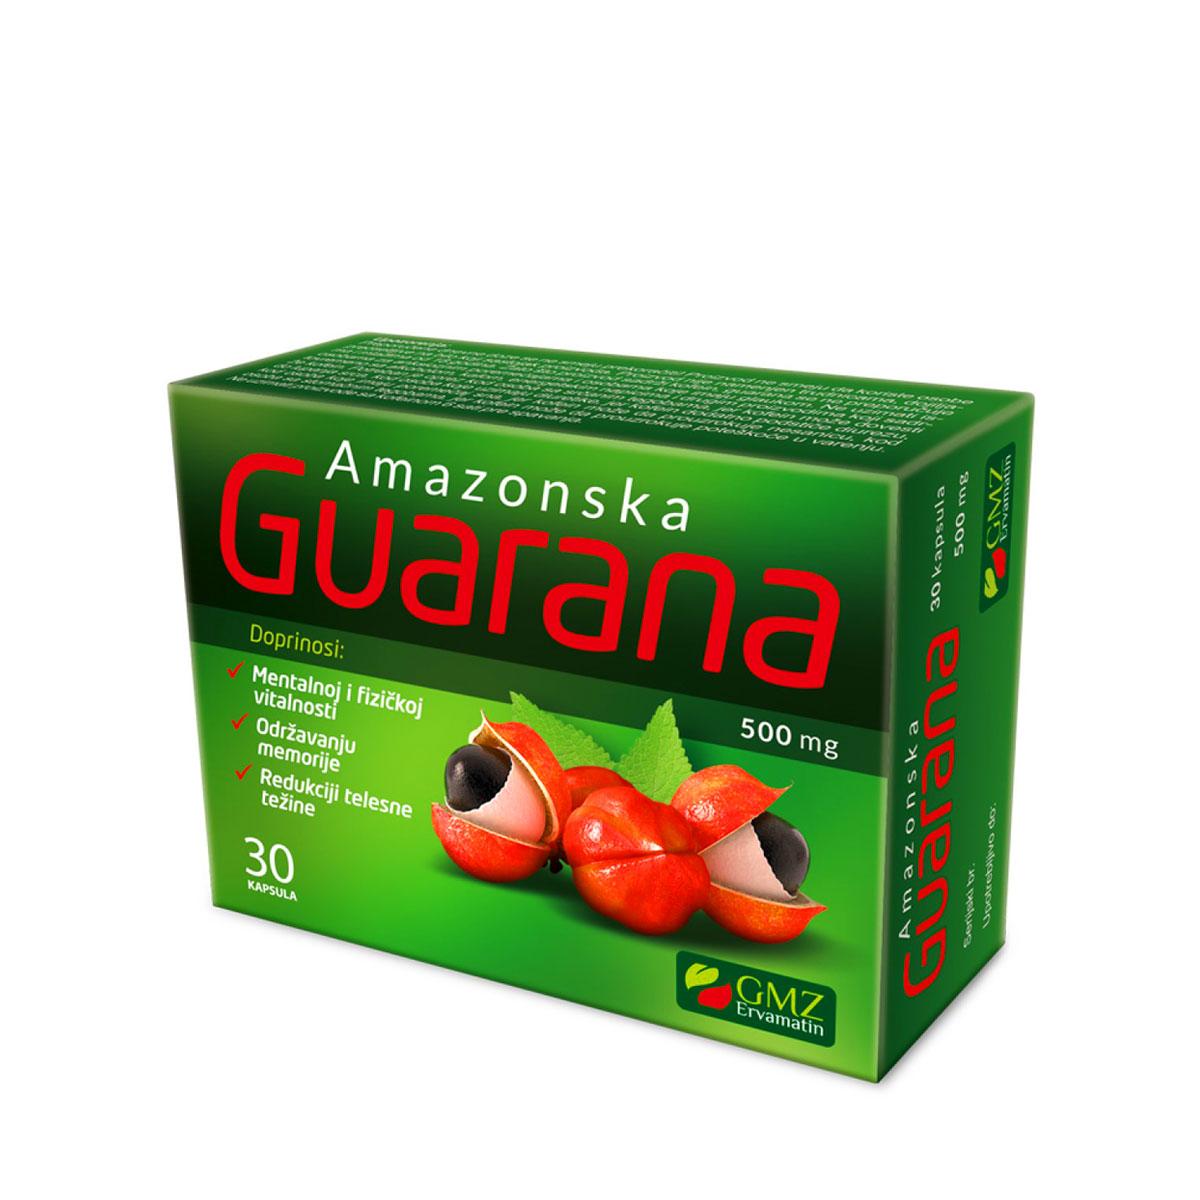 GMZ ERVAMATIN Amazonska Guarana 500mg 30/1 127533